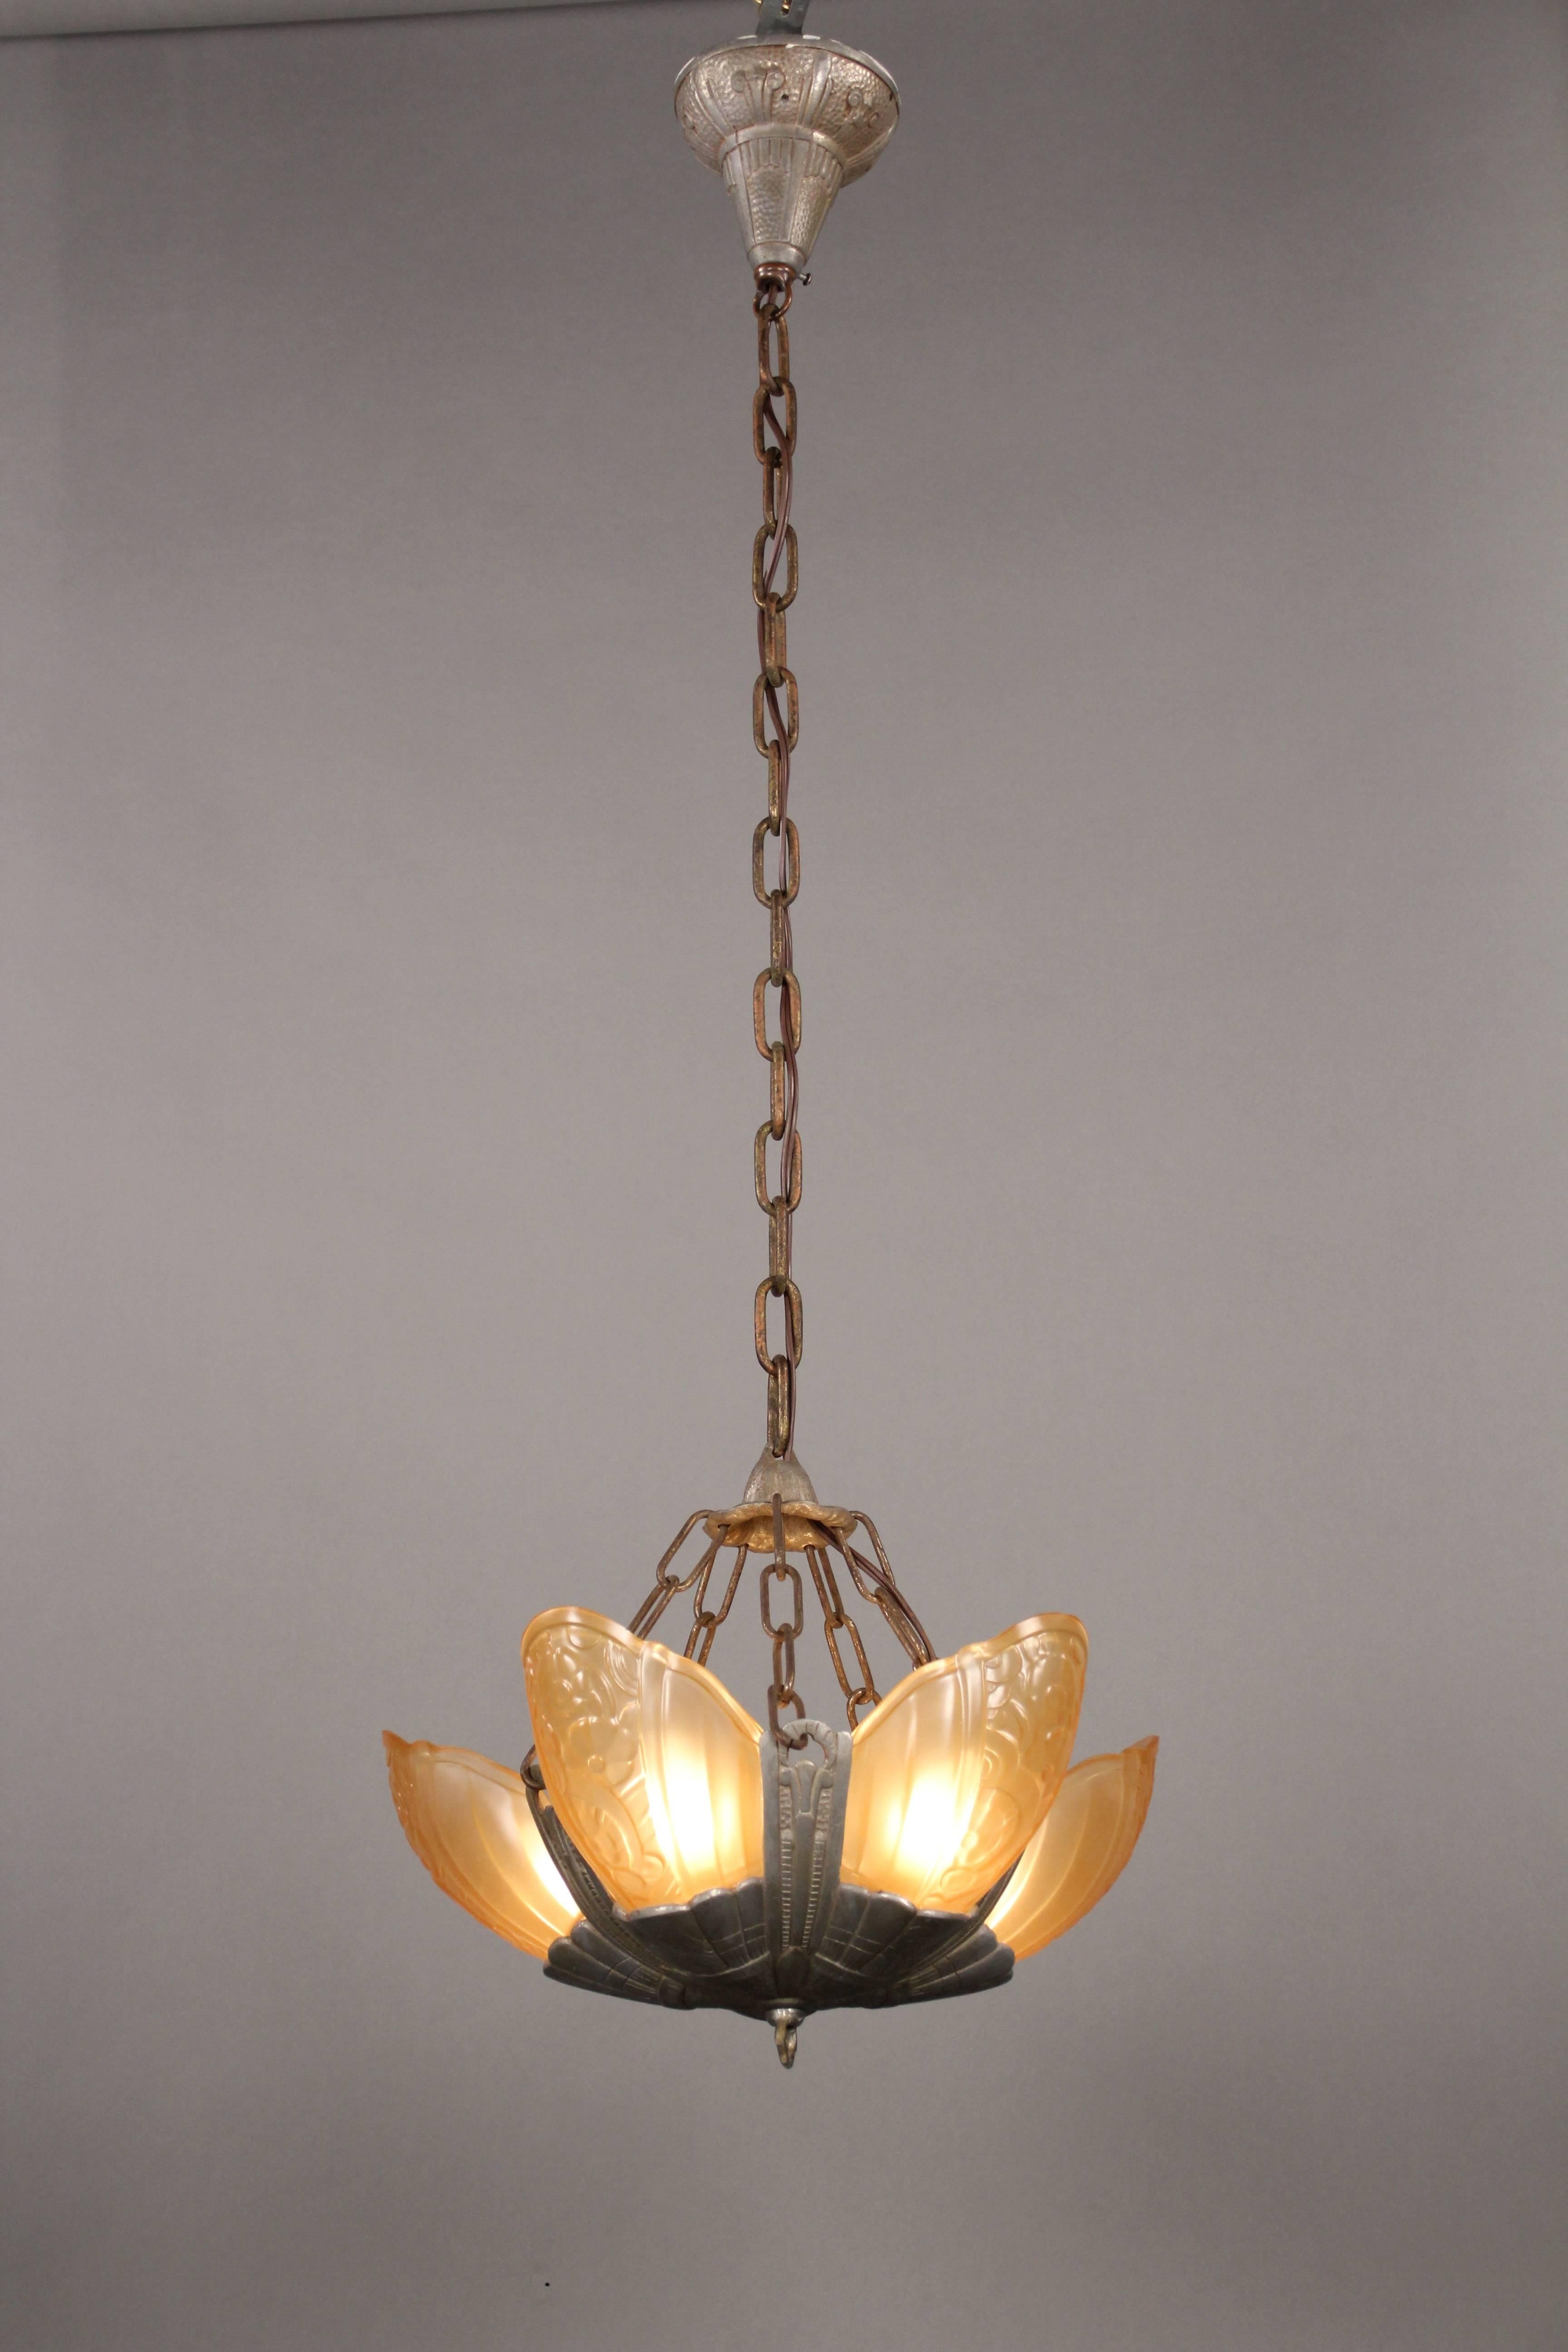 Beautiful 1930s chandelier with original glass insert. Original canopy. Measures: 13